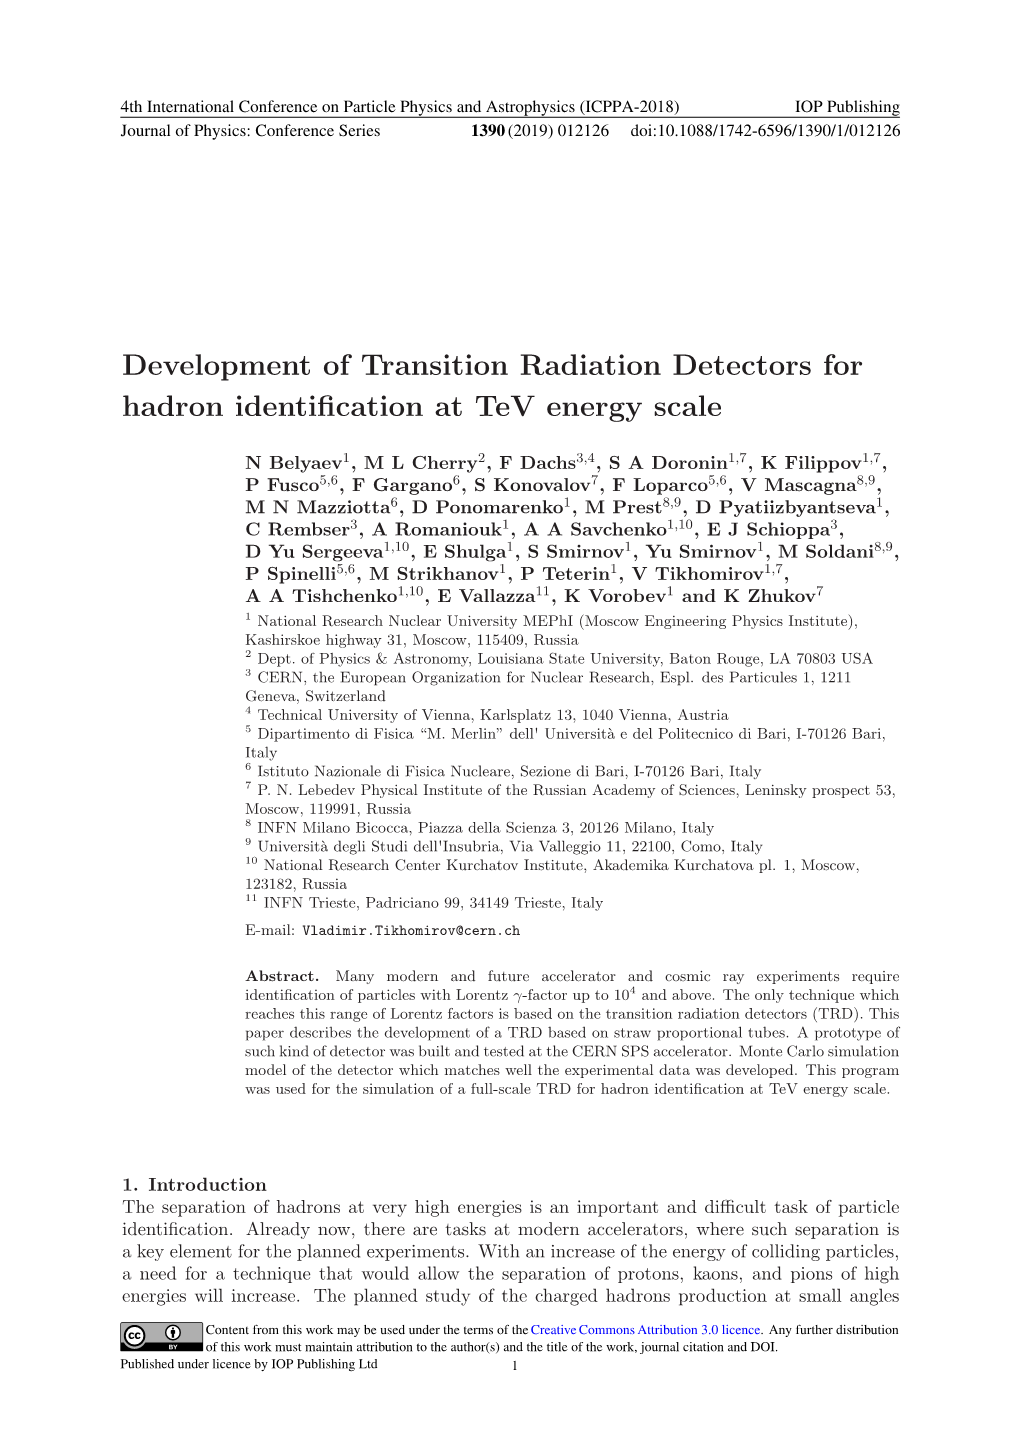 Development of Transition Radiation Detectors for Hadron Identification